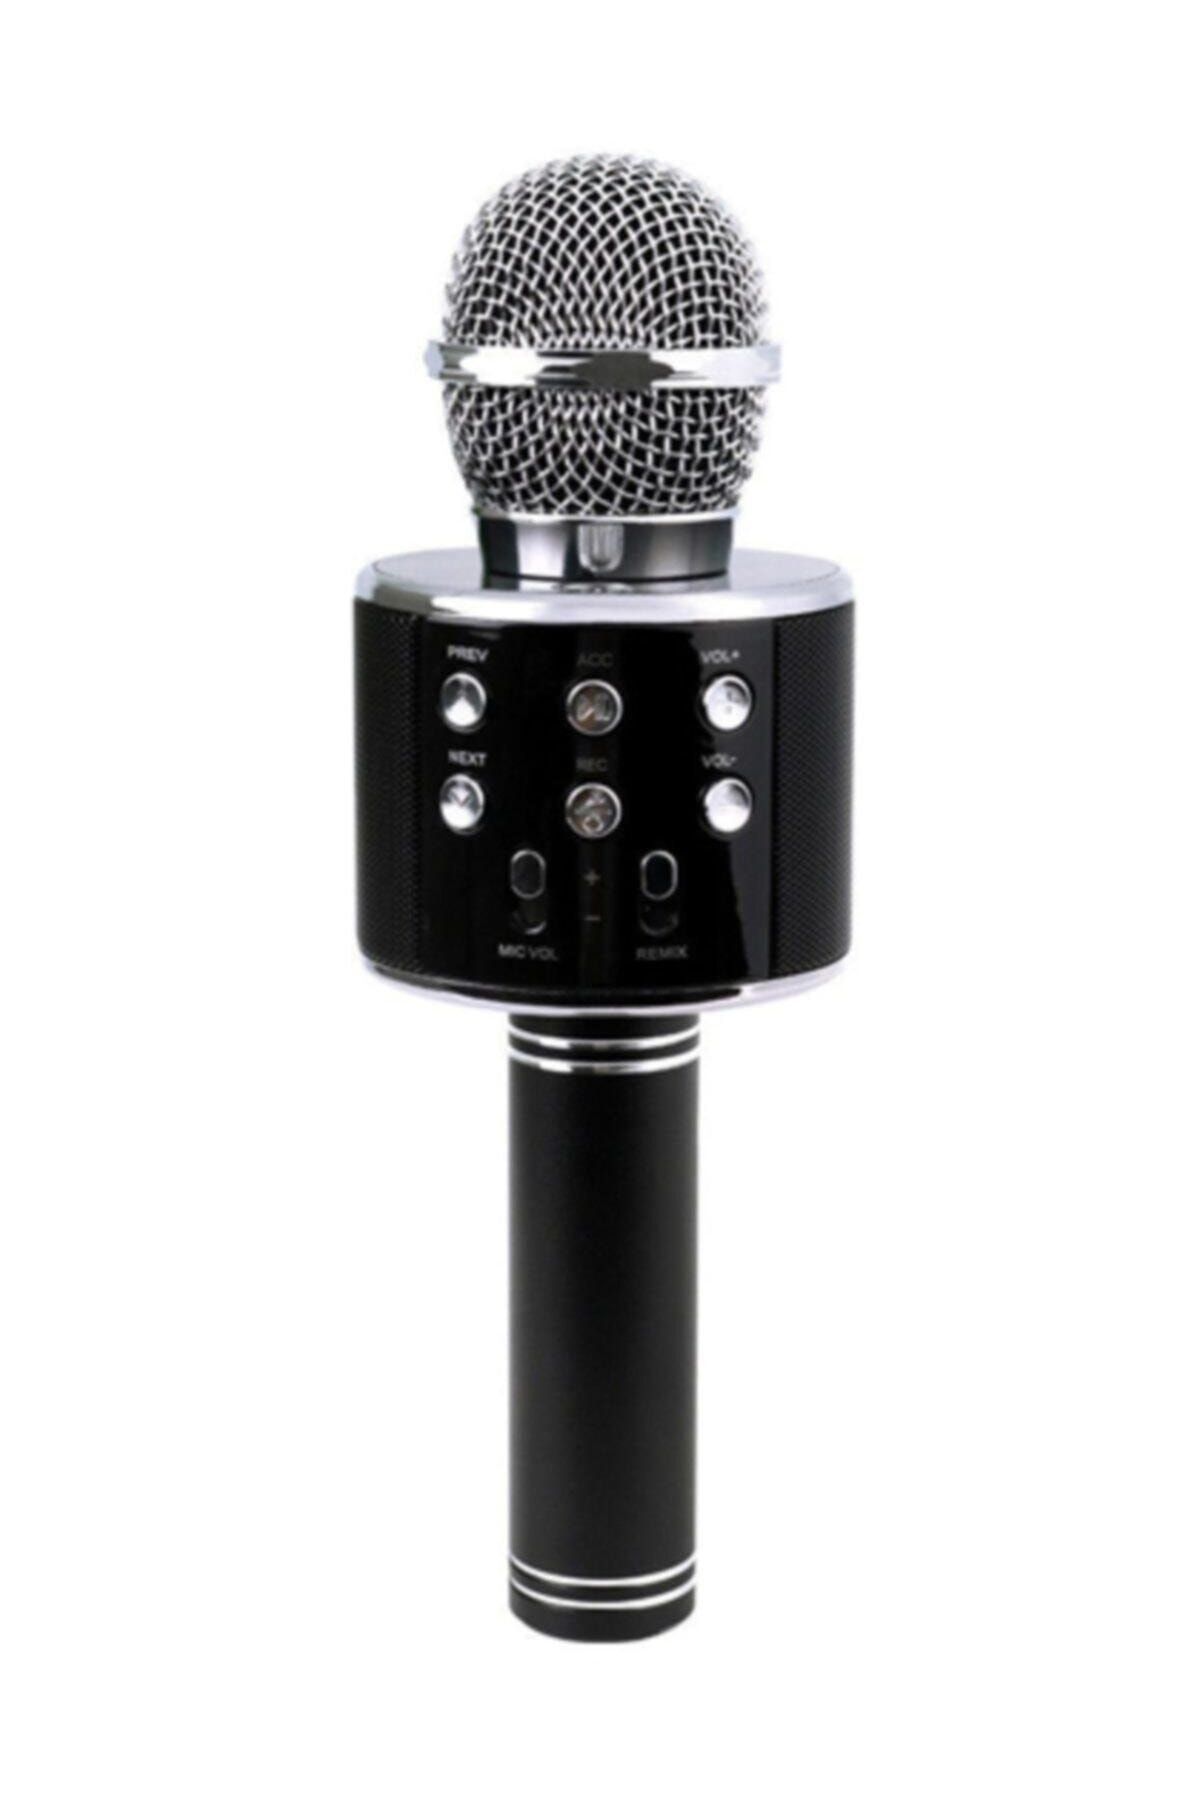 Gomax Ws-858 Bluetooth Karaoke Mikrofon Hoparlör Siyah